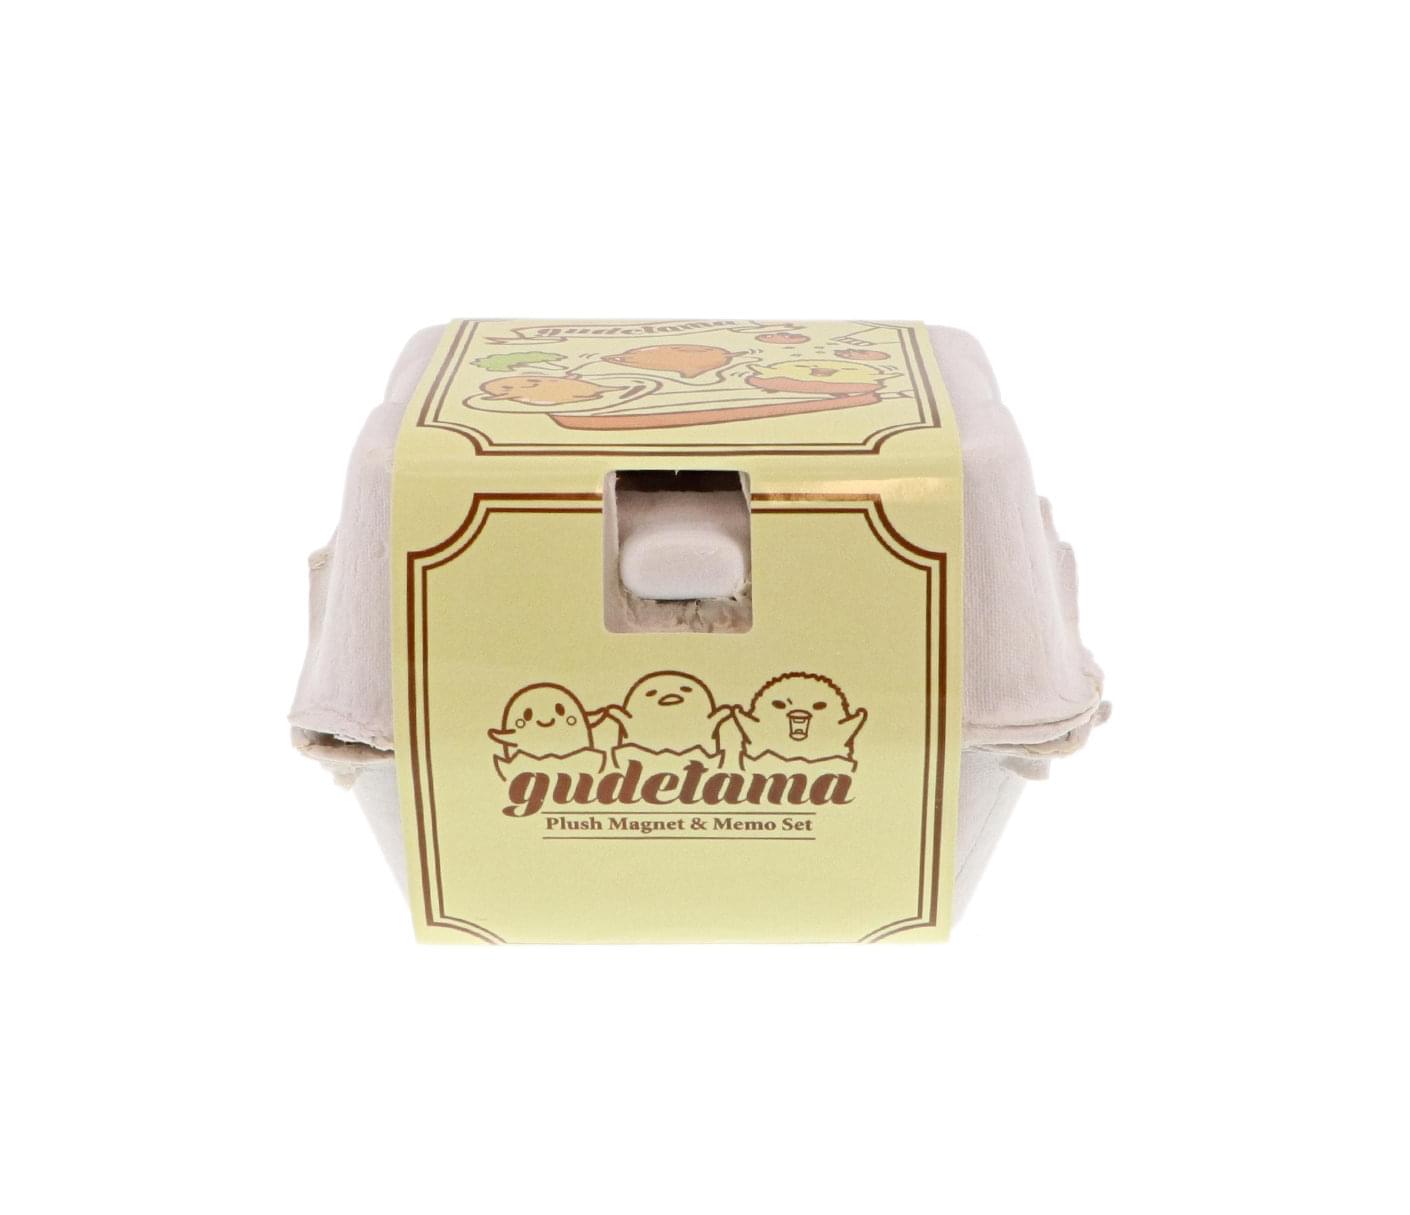 Gudetama & Friends Mini Plush Magnet and Memo Set